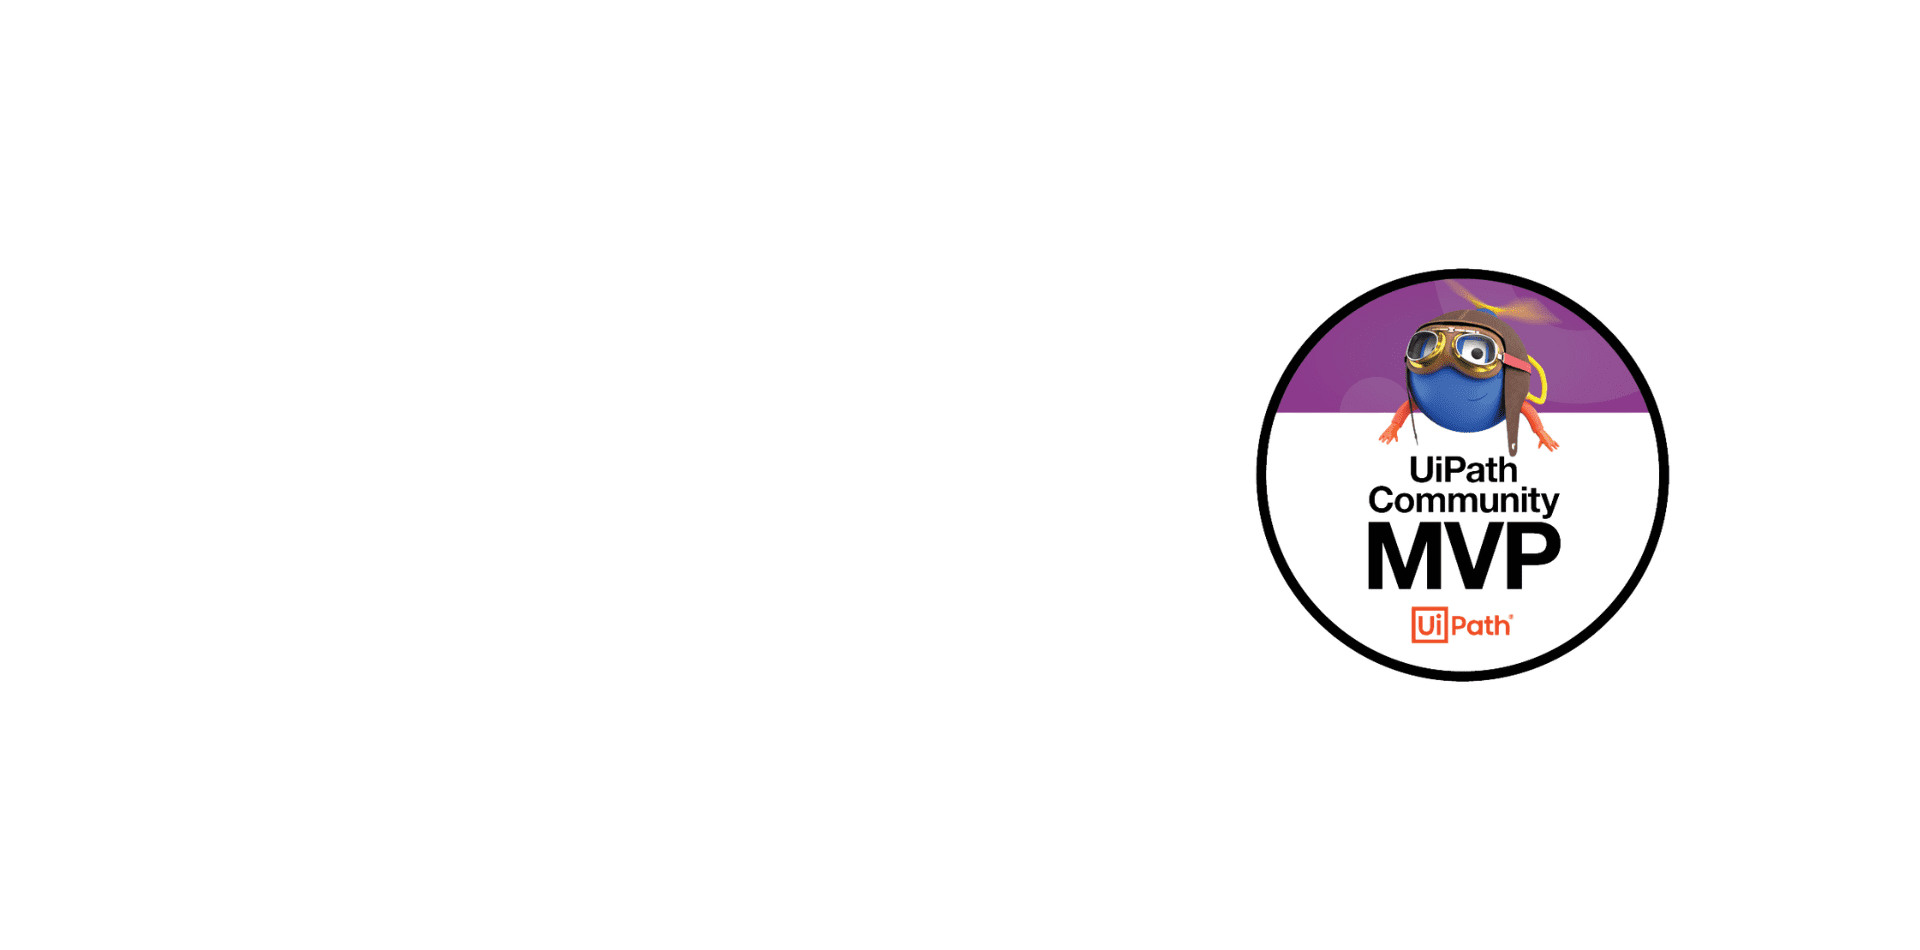 UiPath Community MVP logo